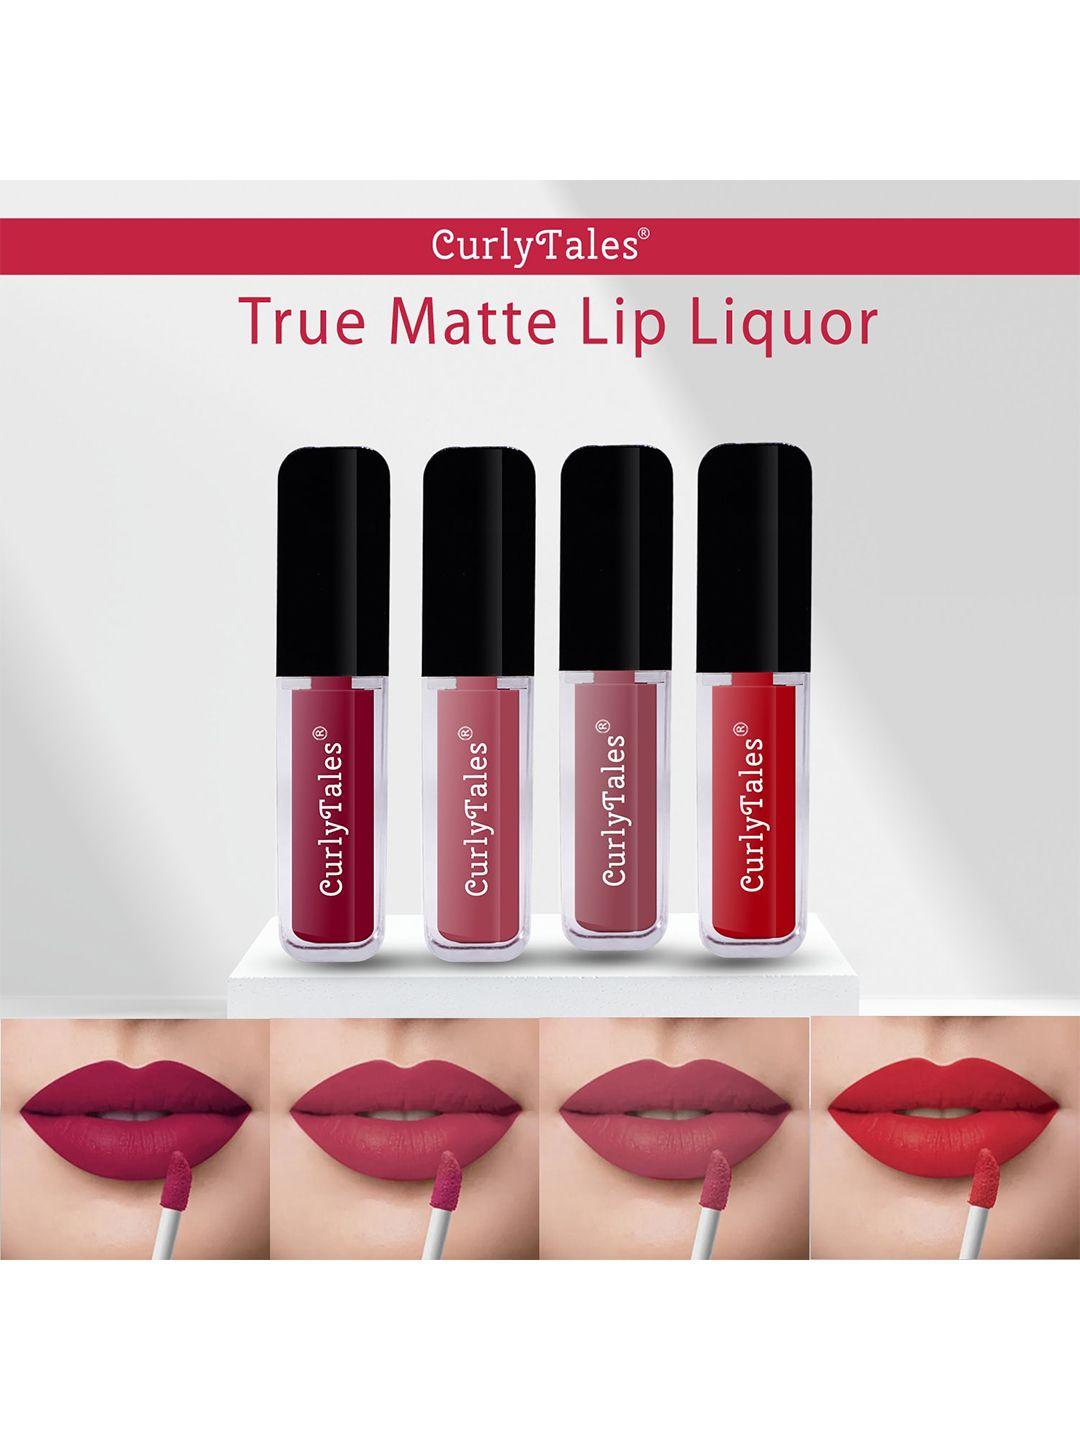 curlytales set of 4 lightweight & waterproof true matte liquid lipsticks 12 ml each- cherry red 07 - pink nude 08 - nude 09 - red 11